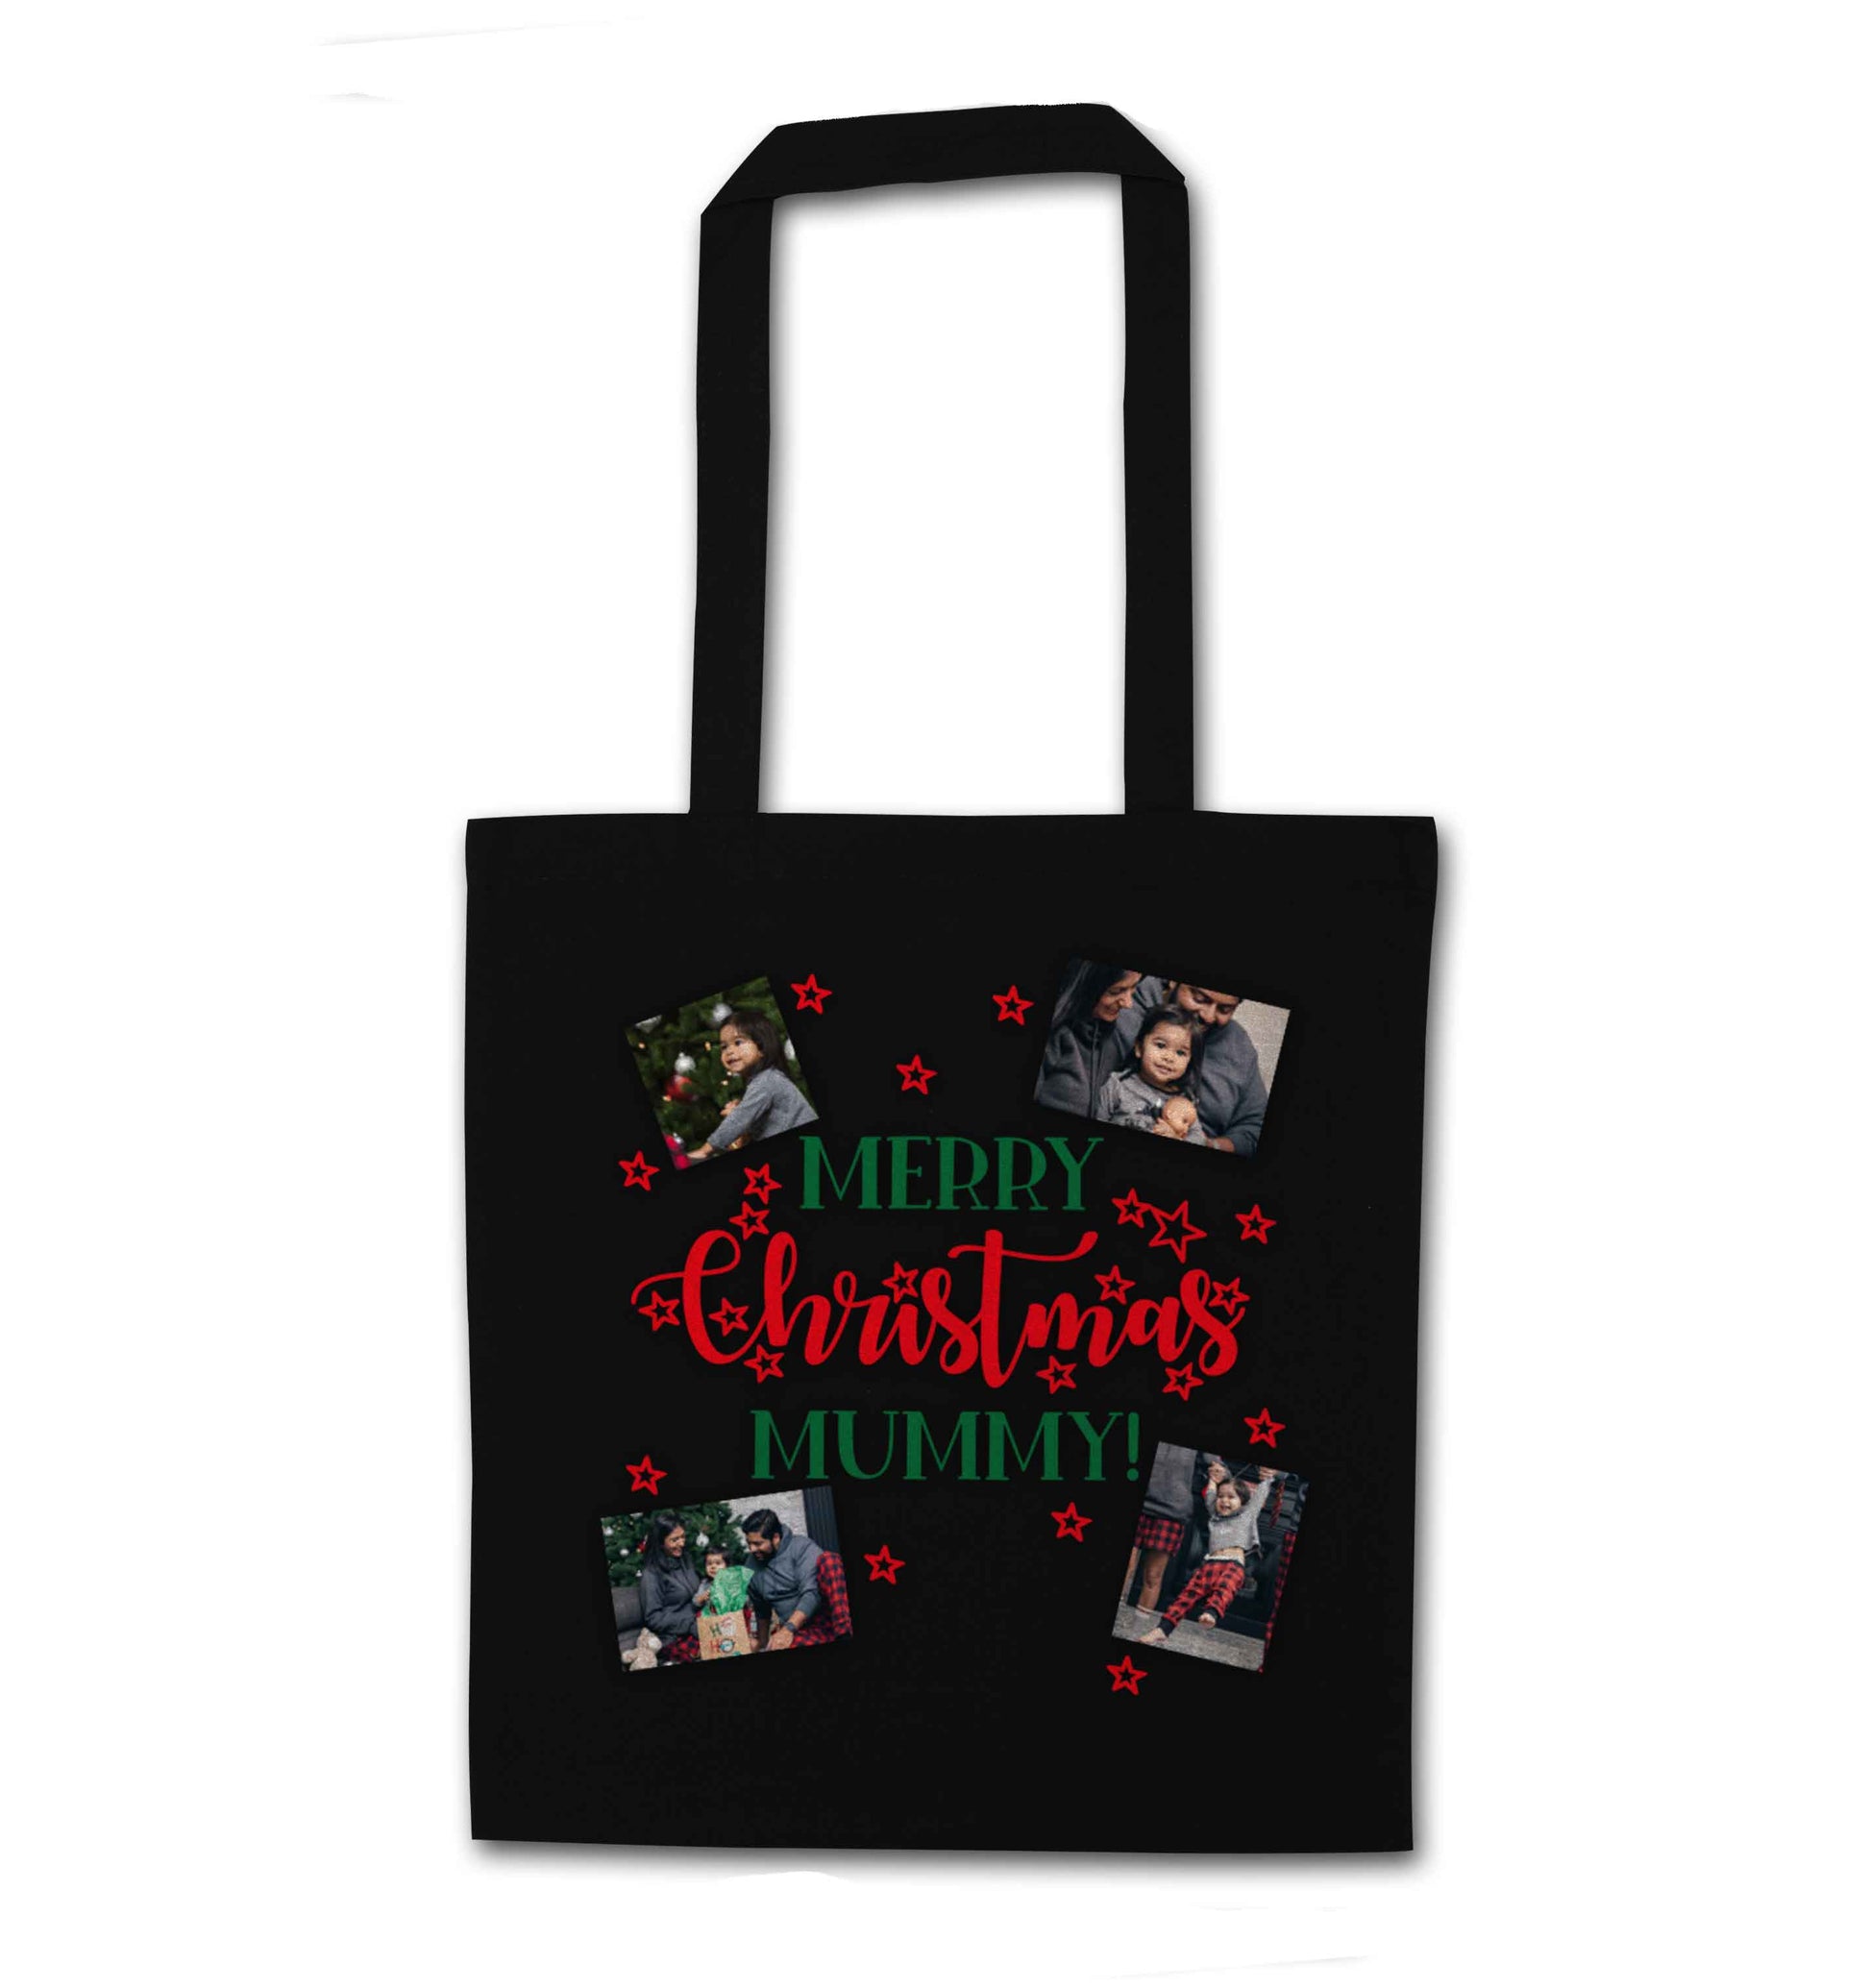 Merry Christmas Mummy black tote bag